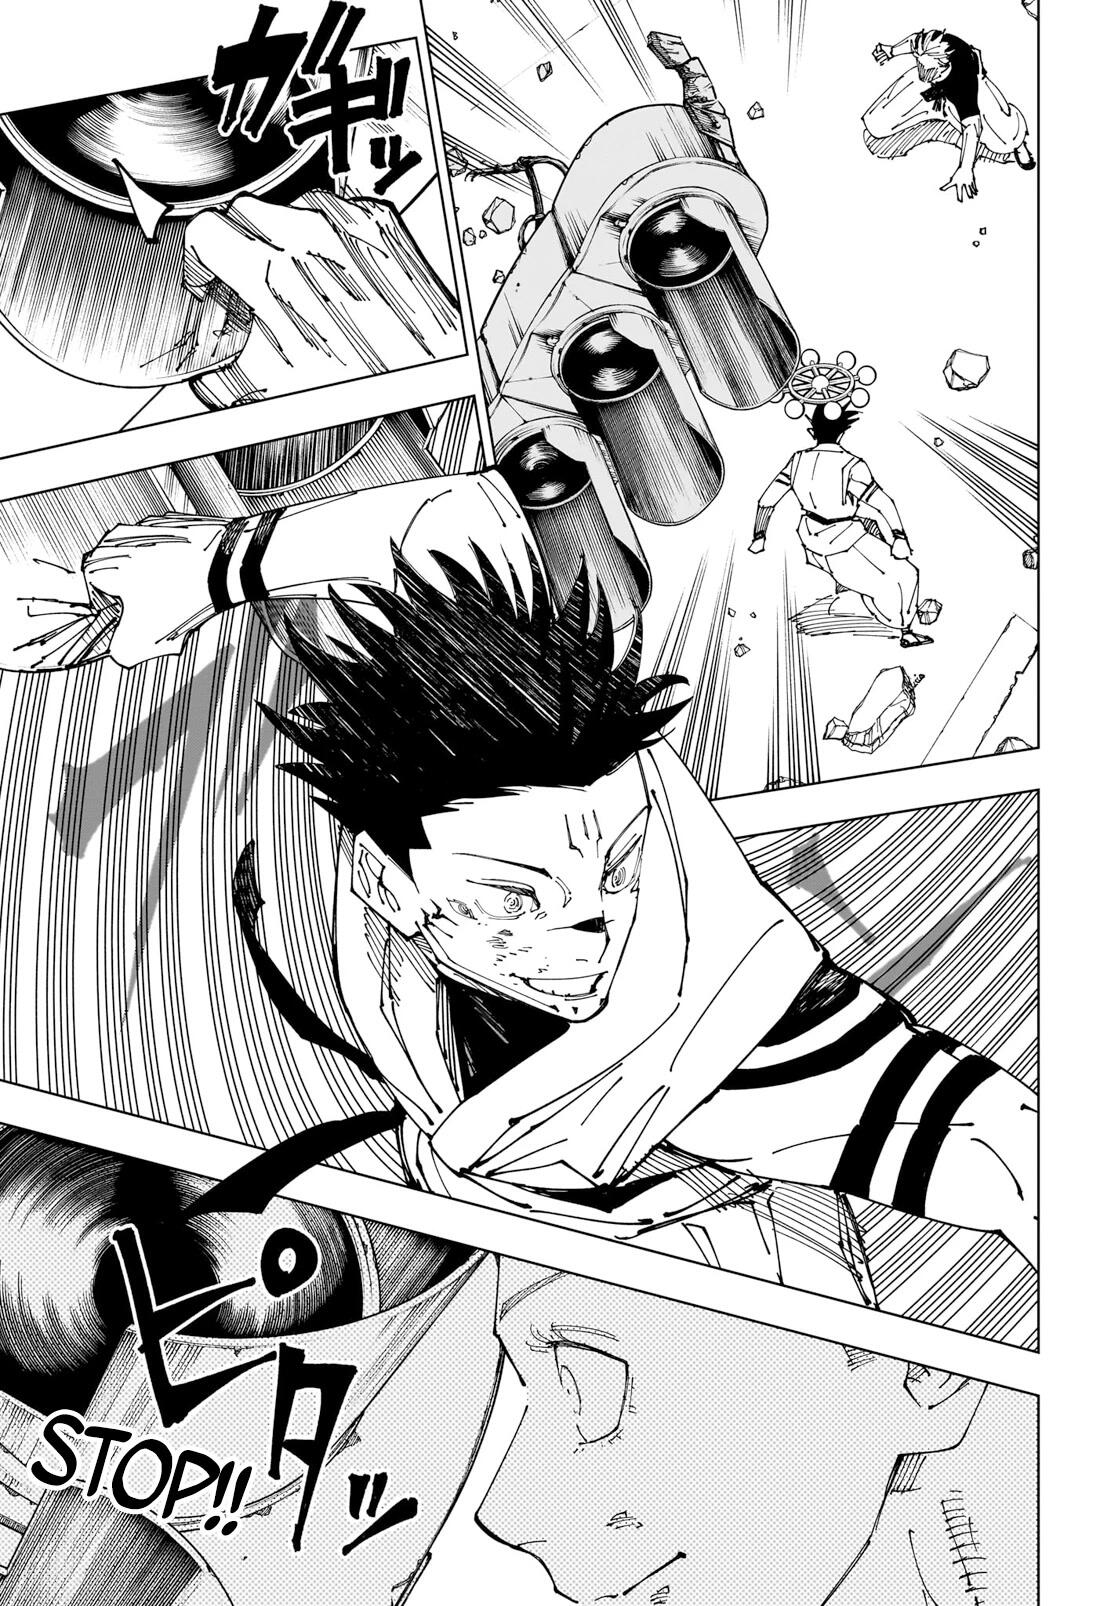 Jujutsu Kaisen Chapter 231: The Decisive Battle In The Uninhabited, Demon-Infested Shinjuku ⑨ page 15 - Mangakakalot